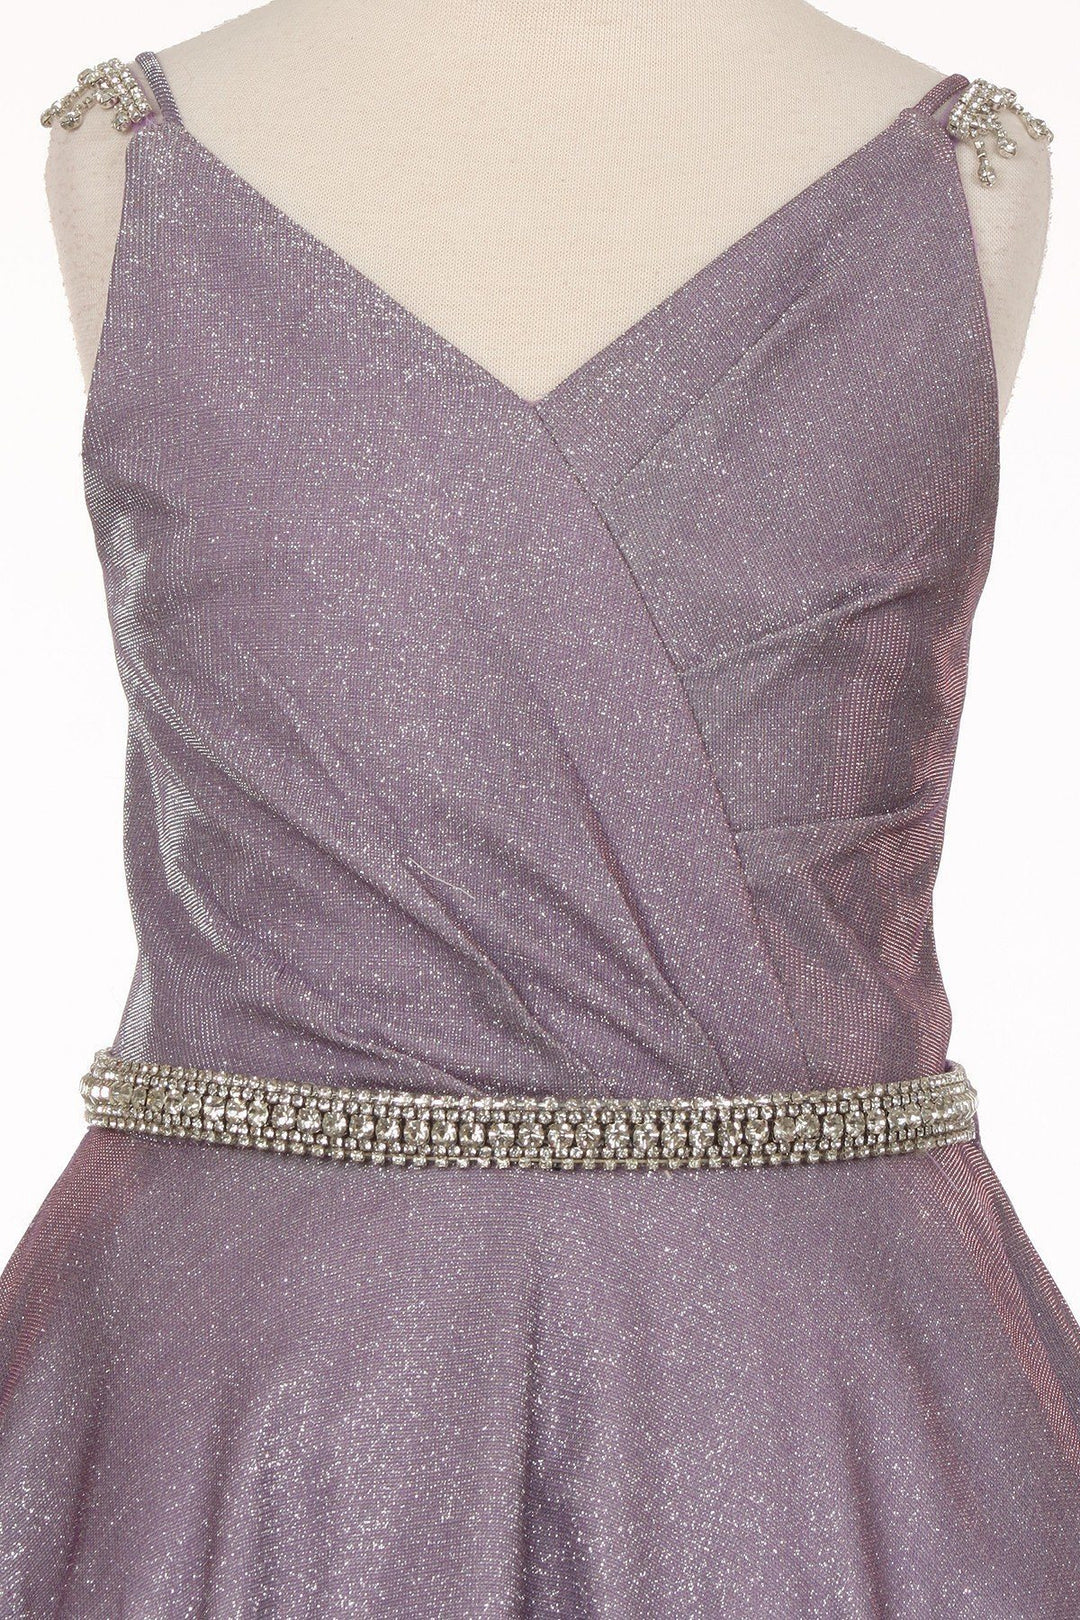 Girls Short Beaded Metallic Dress by Cinderella Couture 8014